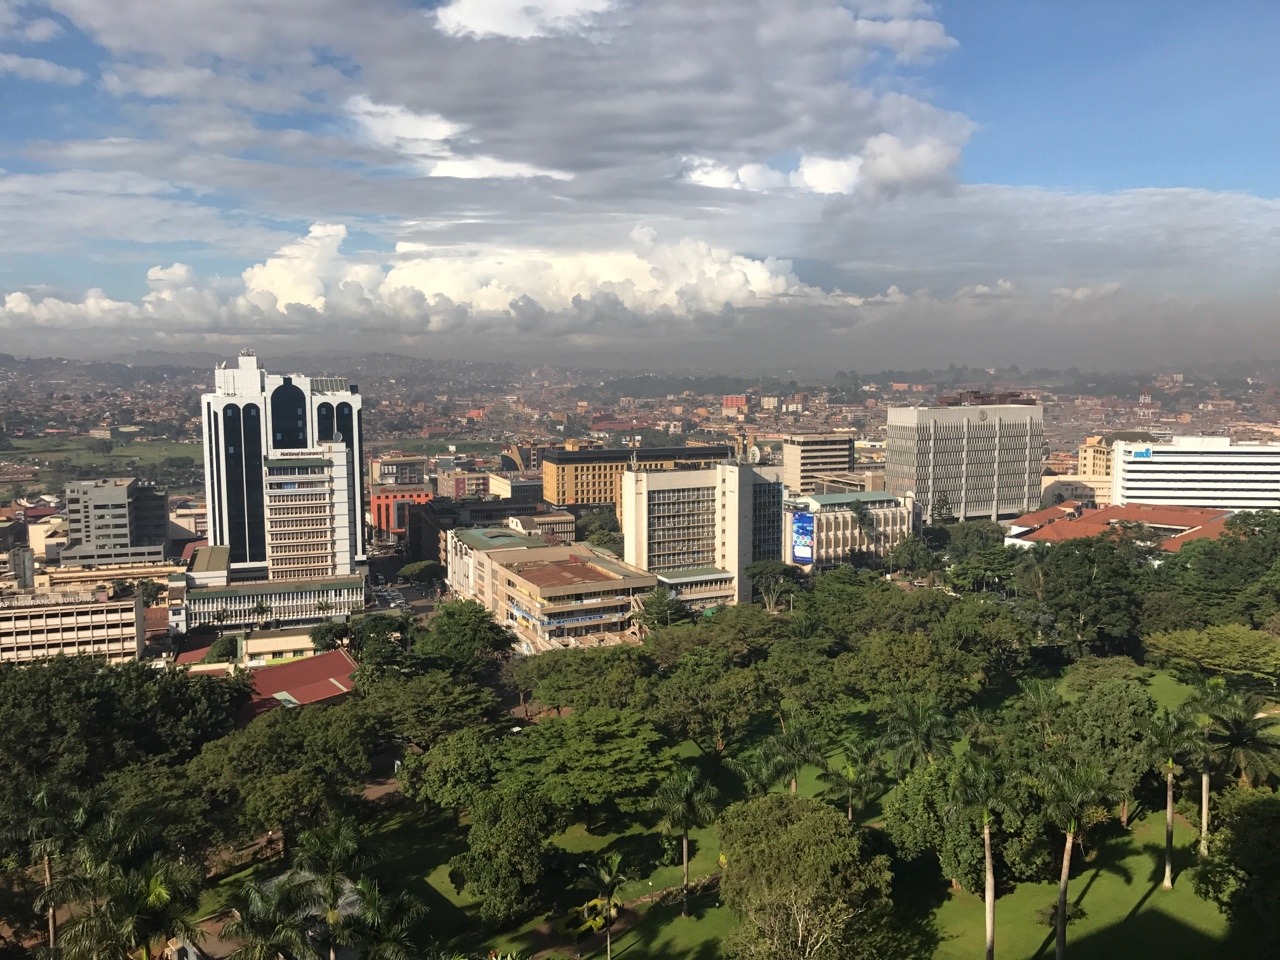 Greetings from Kampala, Uganda